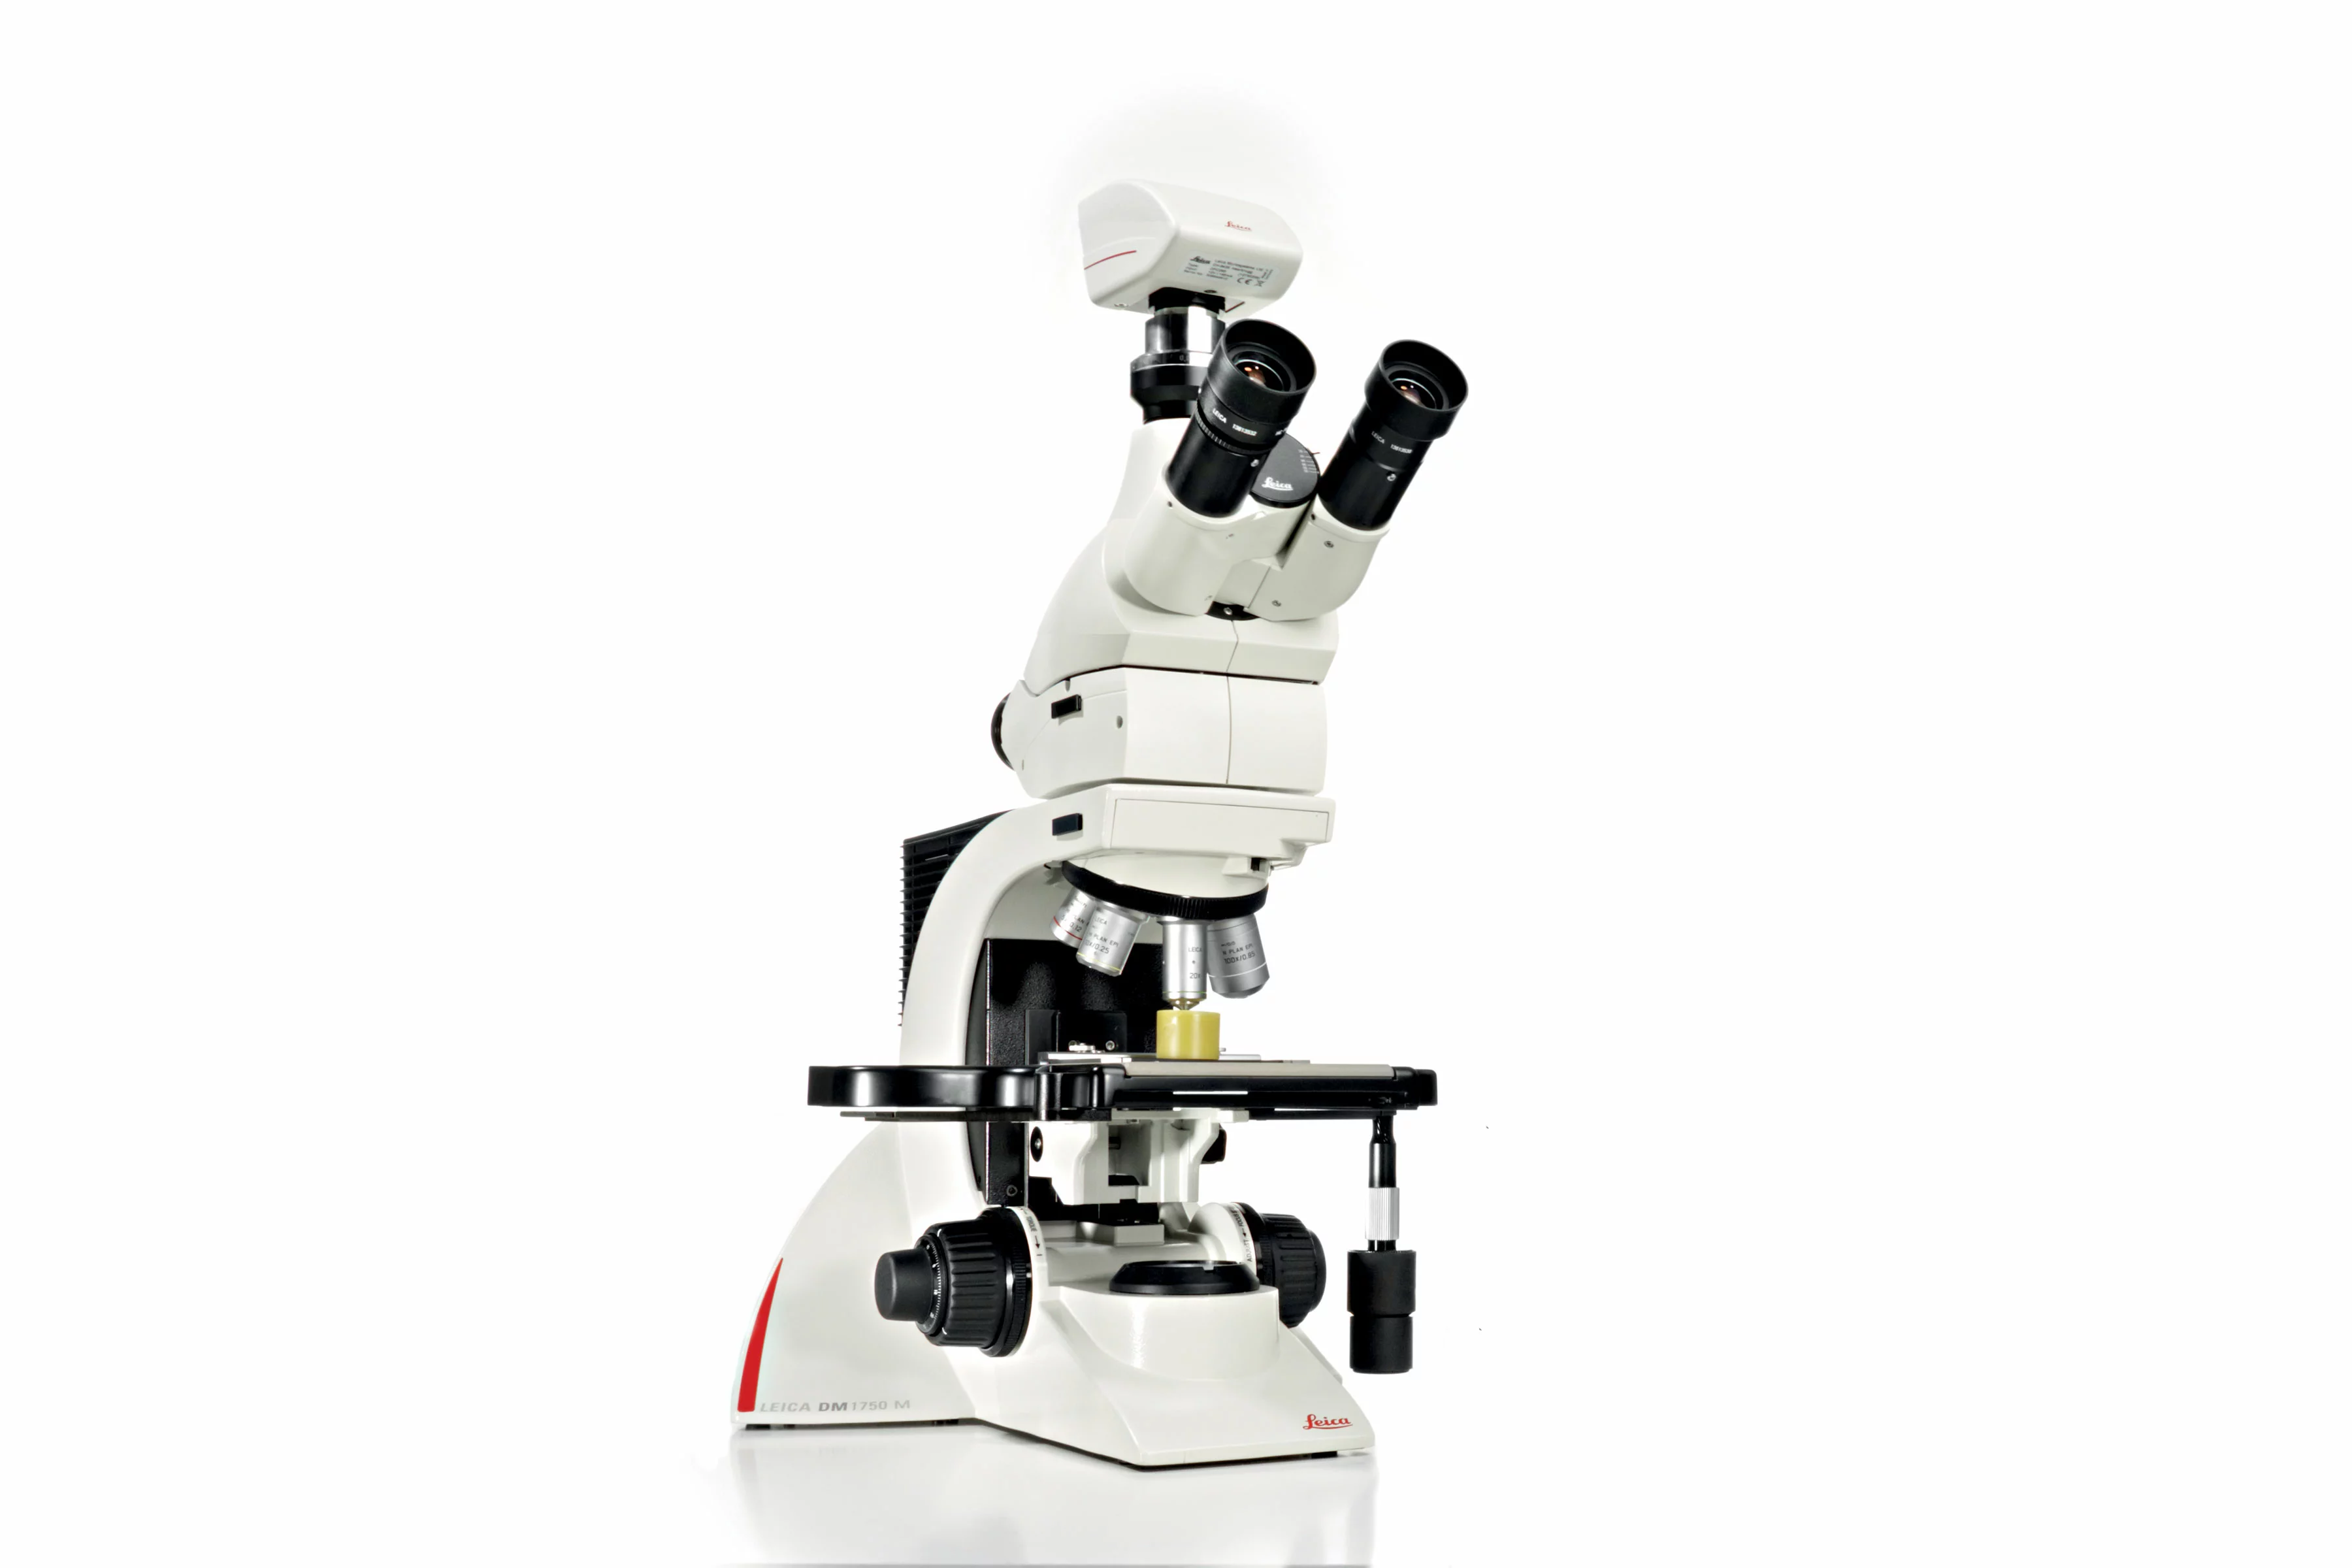 Leica DM1750 M Materials Analysis Microscope